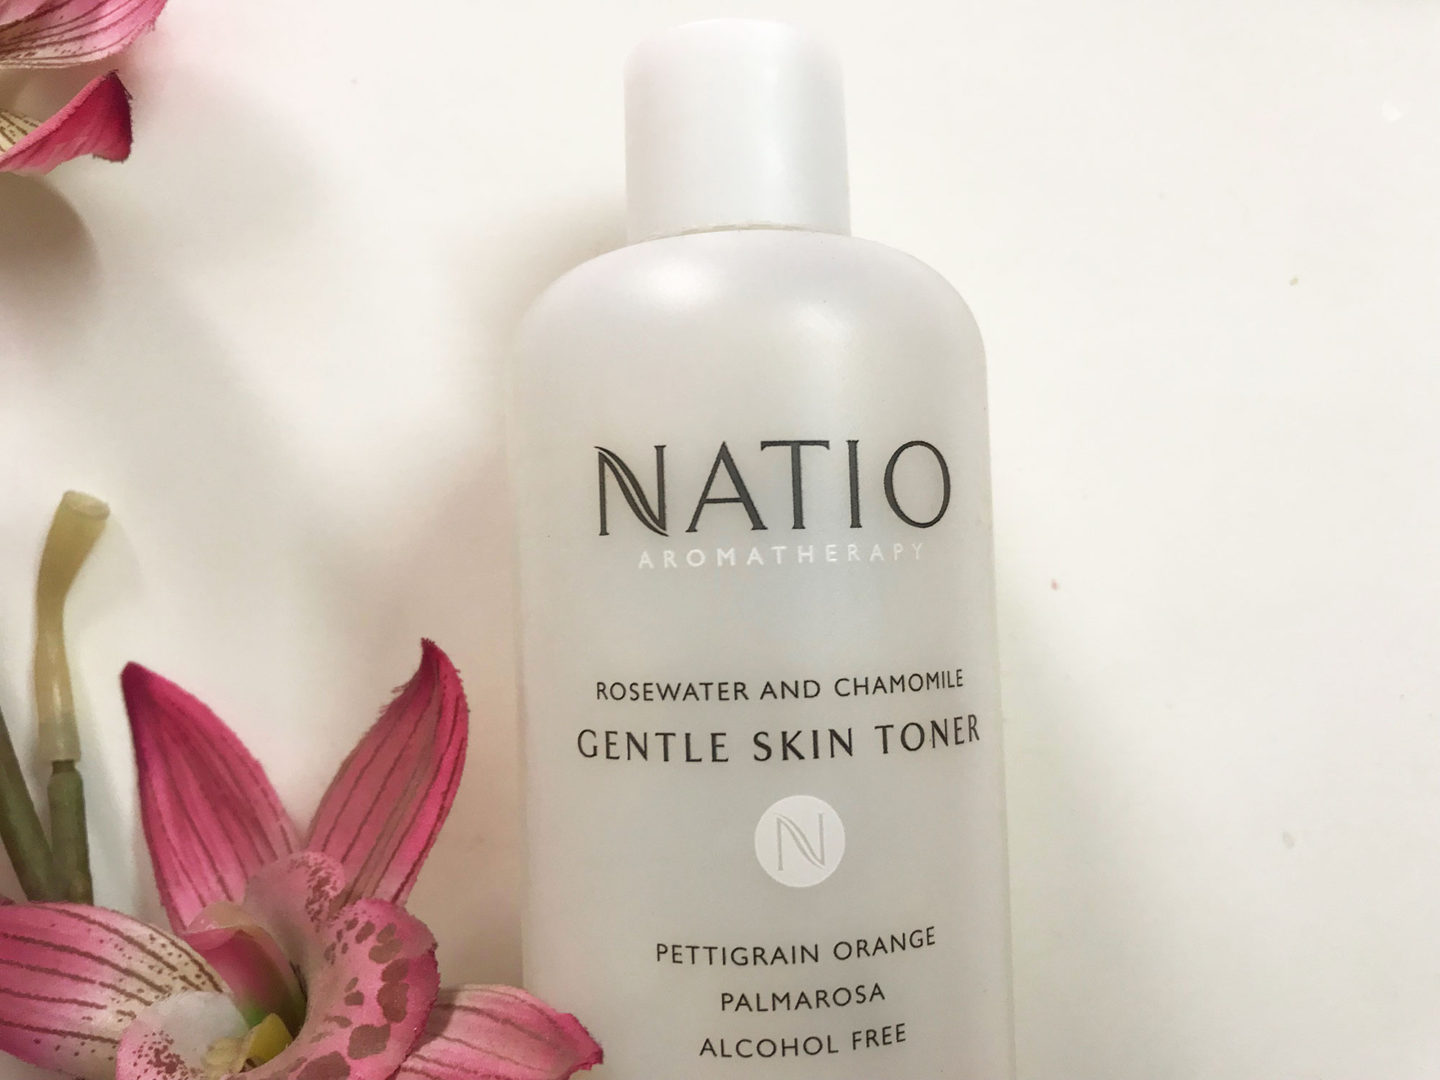 Natio aromatherapy gentle skin toner review